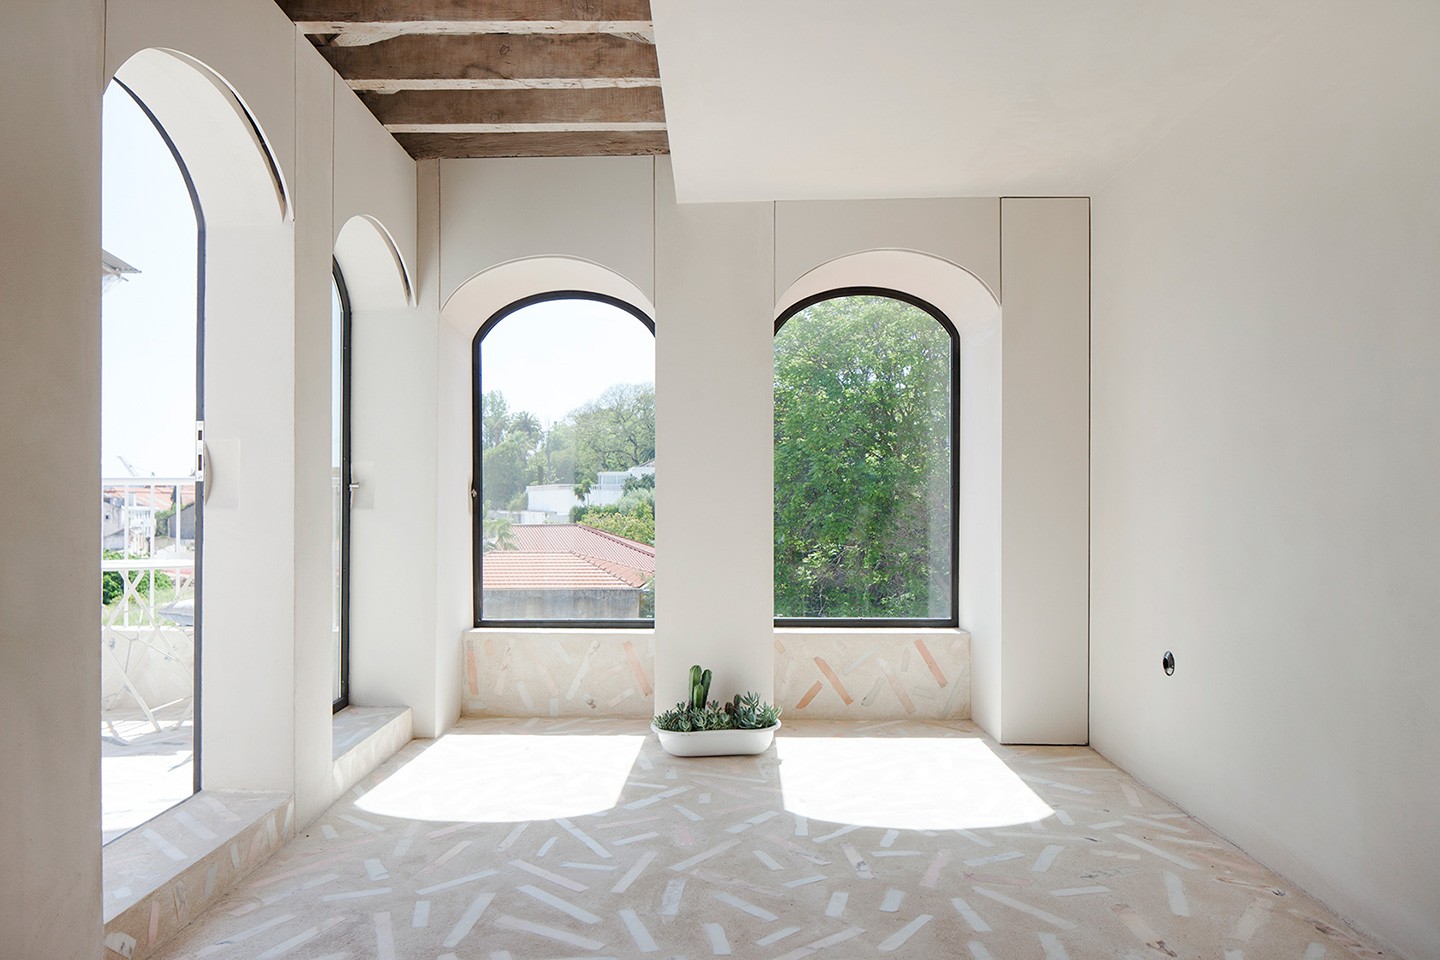 Квартира с признаками старины в Лиссабоне – проект архитектора Жоао Гамейро